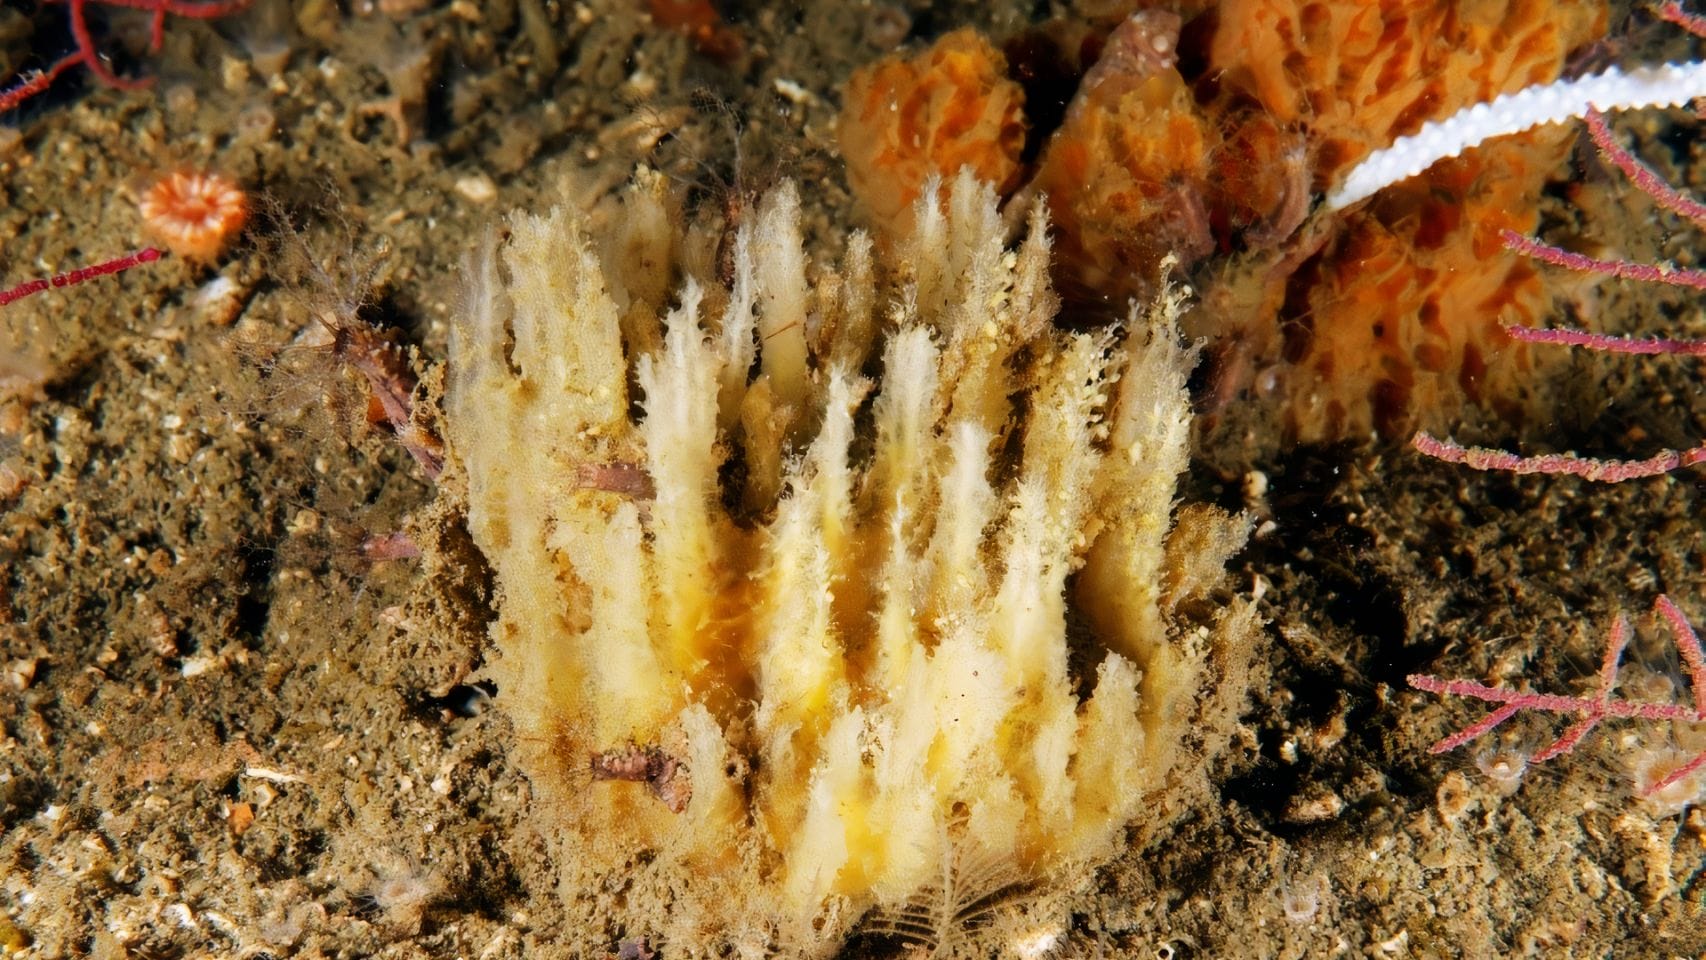 La esponja marina descubierta en aguas gallegas.